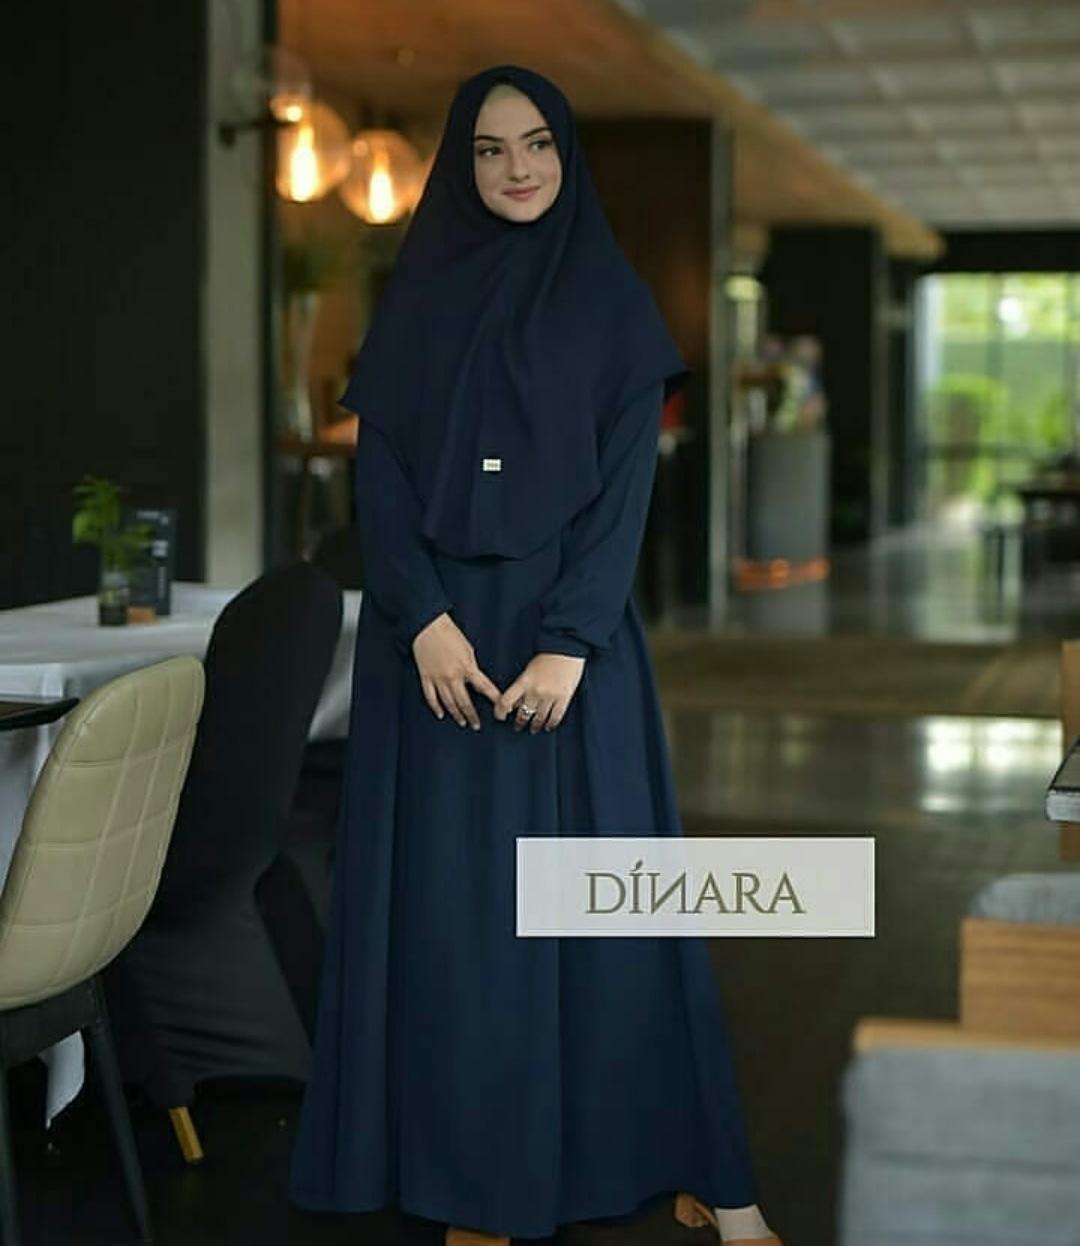 Baju Muslim Modern Gamis VAMOSA SYARI Moscrepe (Free Hijab / Khimar ) Terusan Wanita Lengan Panjang Best Seller Trendy Modern Baju Stelan Syar’i Polos Muslim Gaun Dress Pesta Murah Terbaru Pakaian Simple Syari Couple Set Casual 2019